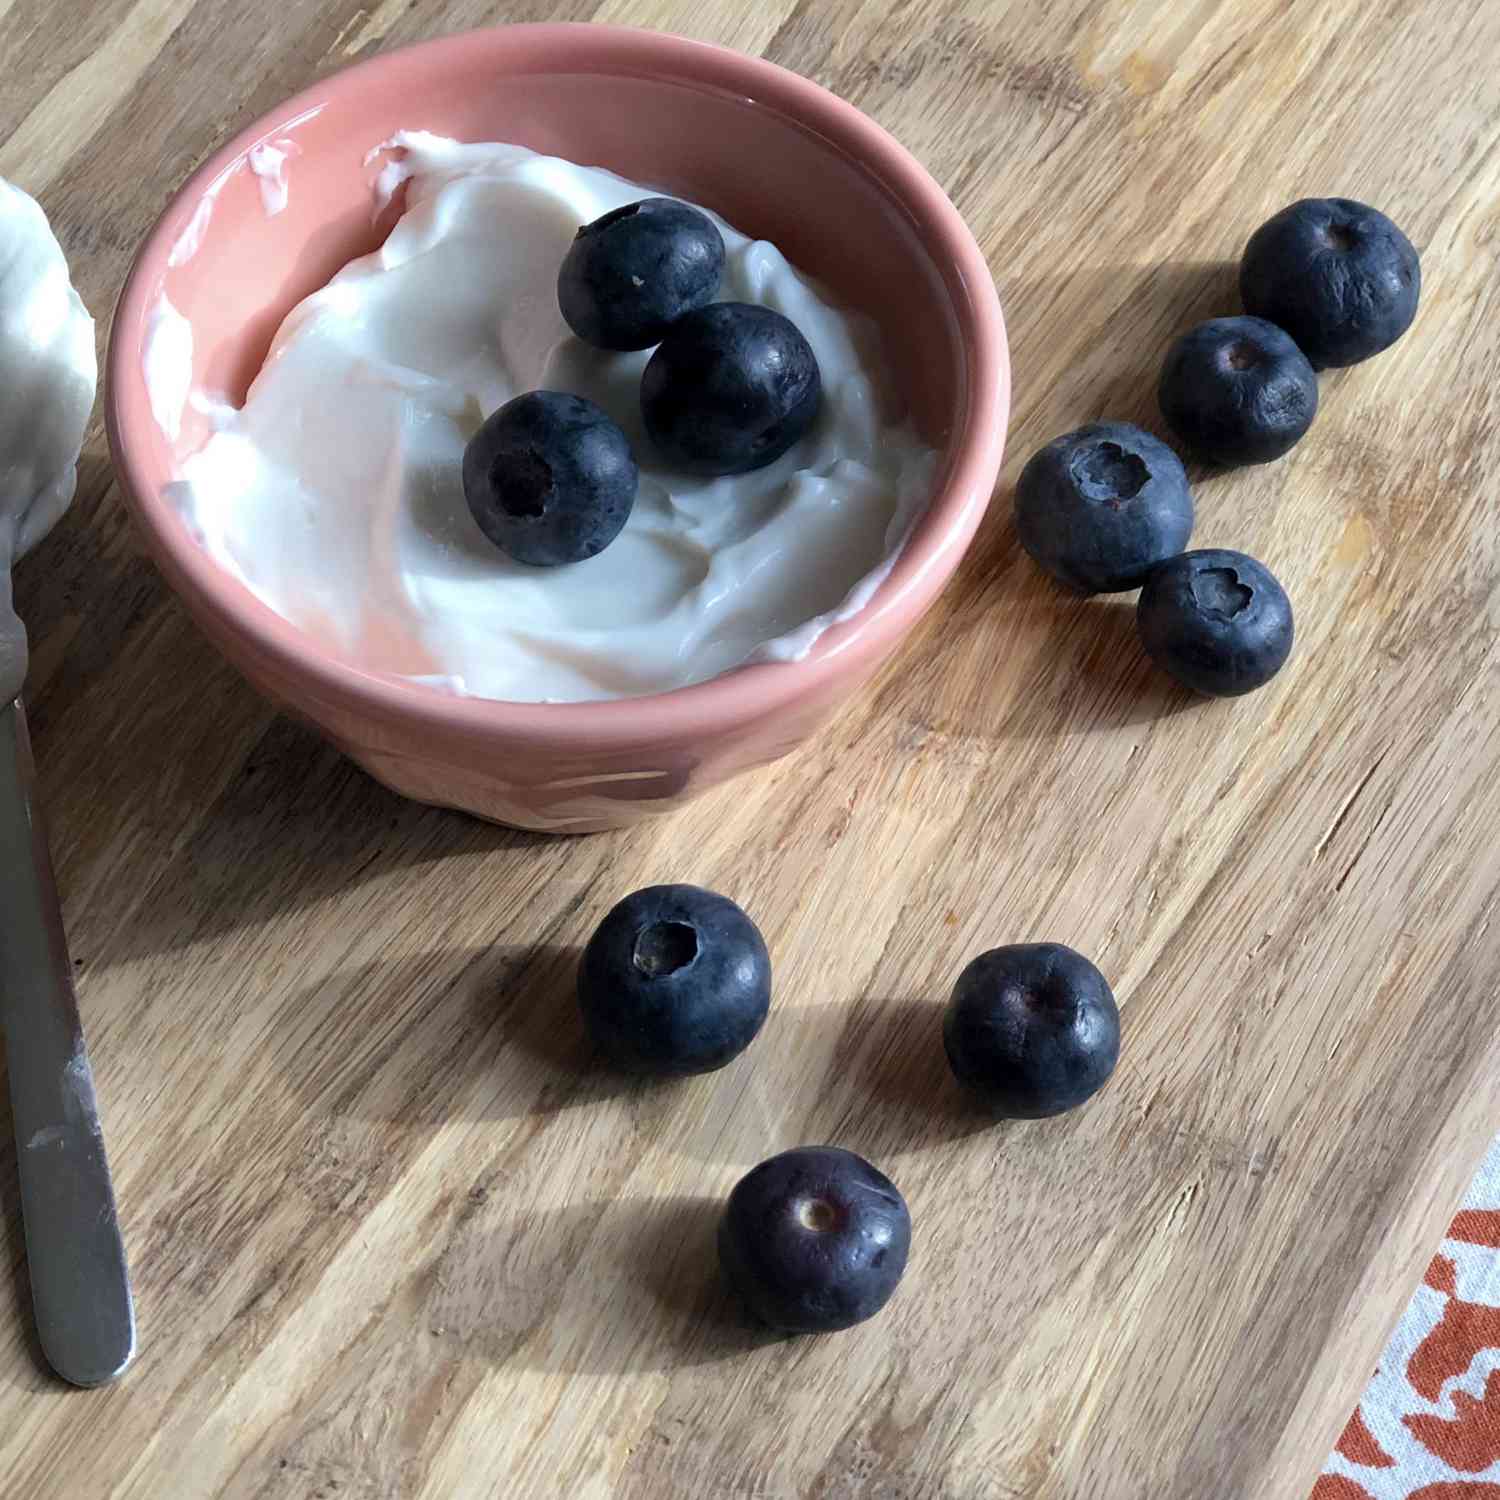 creamy-looking yogurt in a ramekin with fresh blueberries